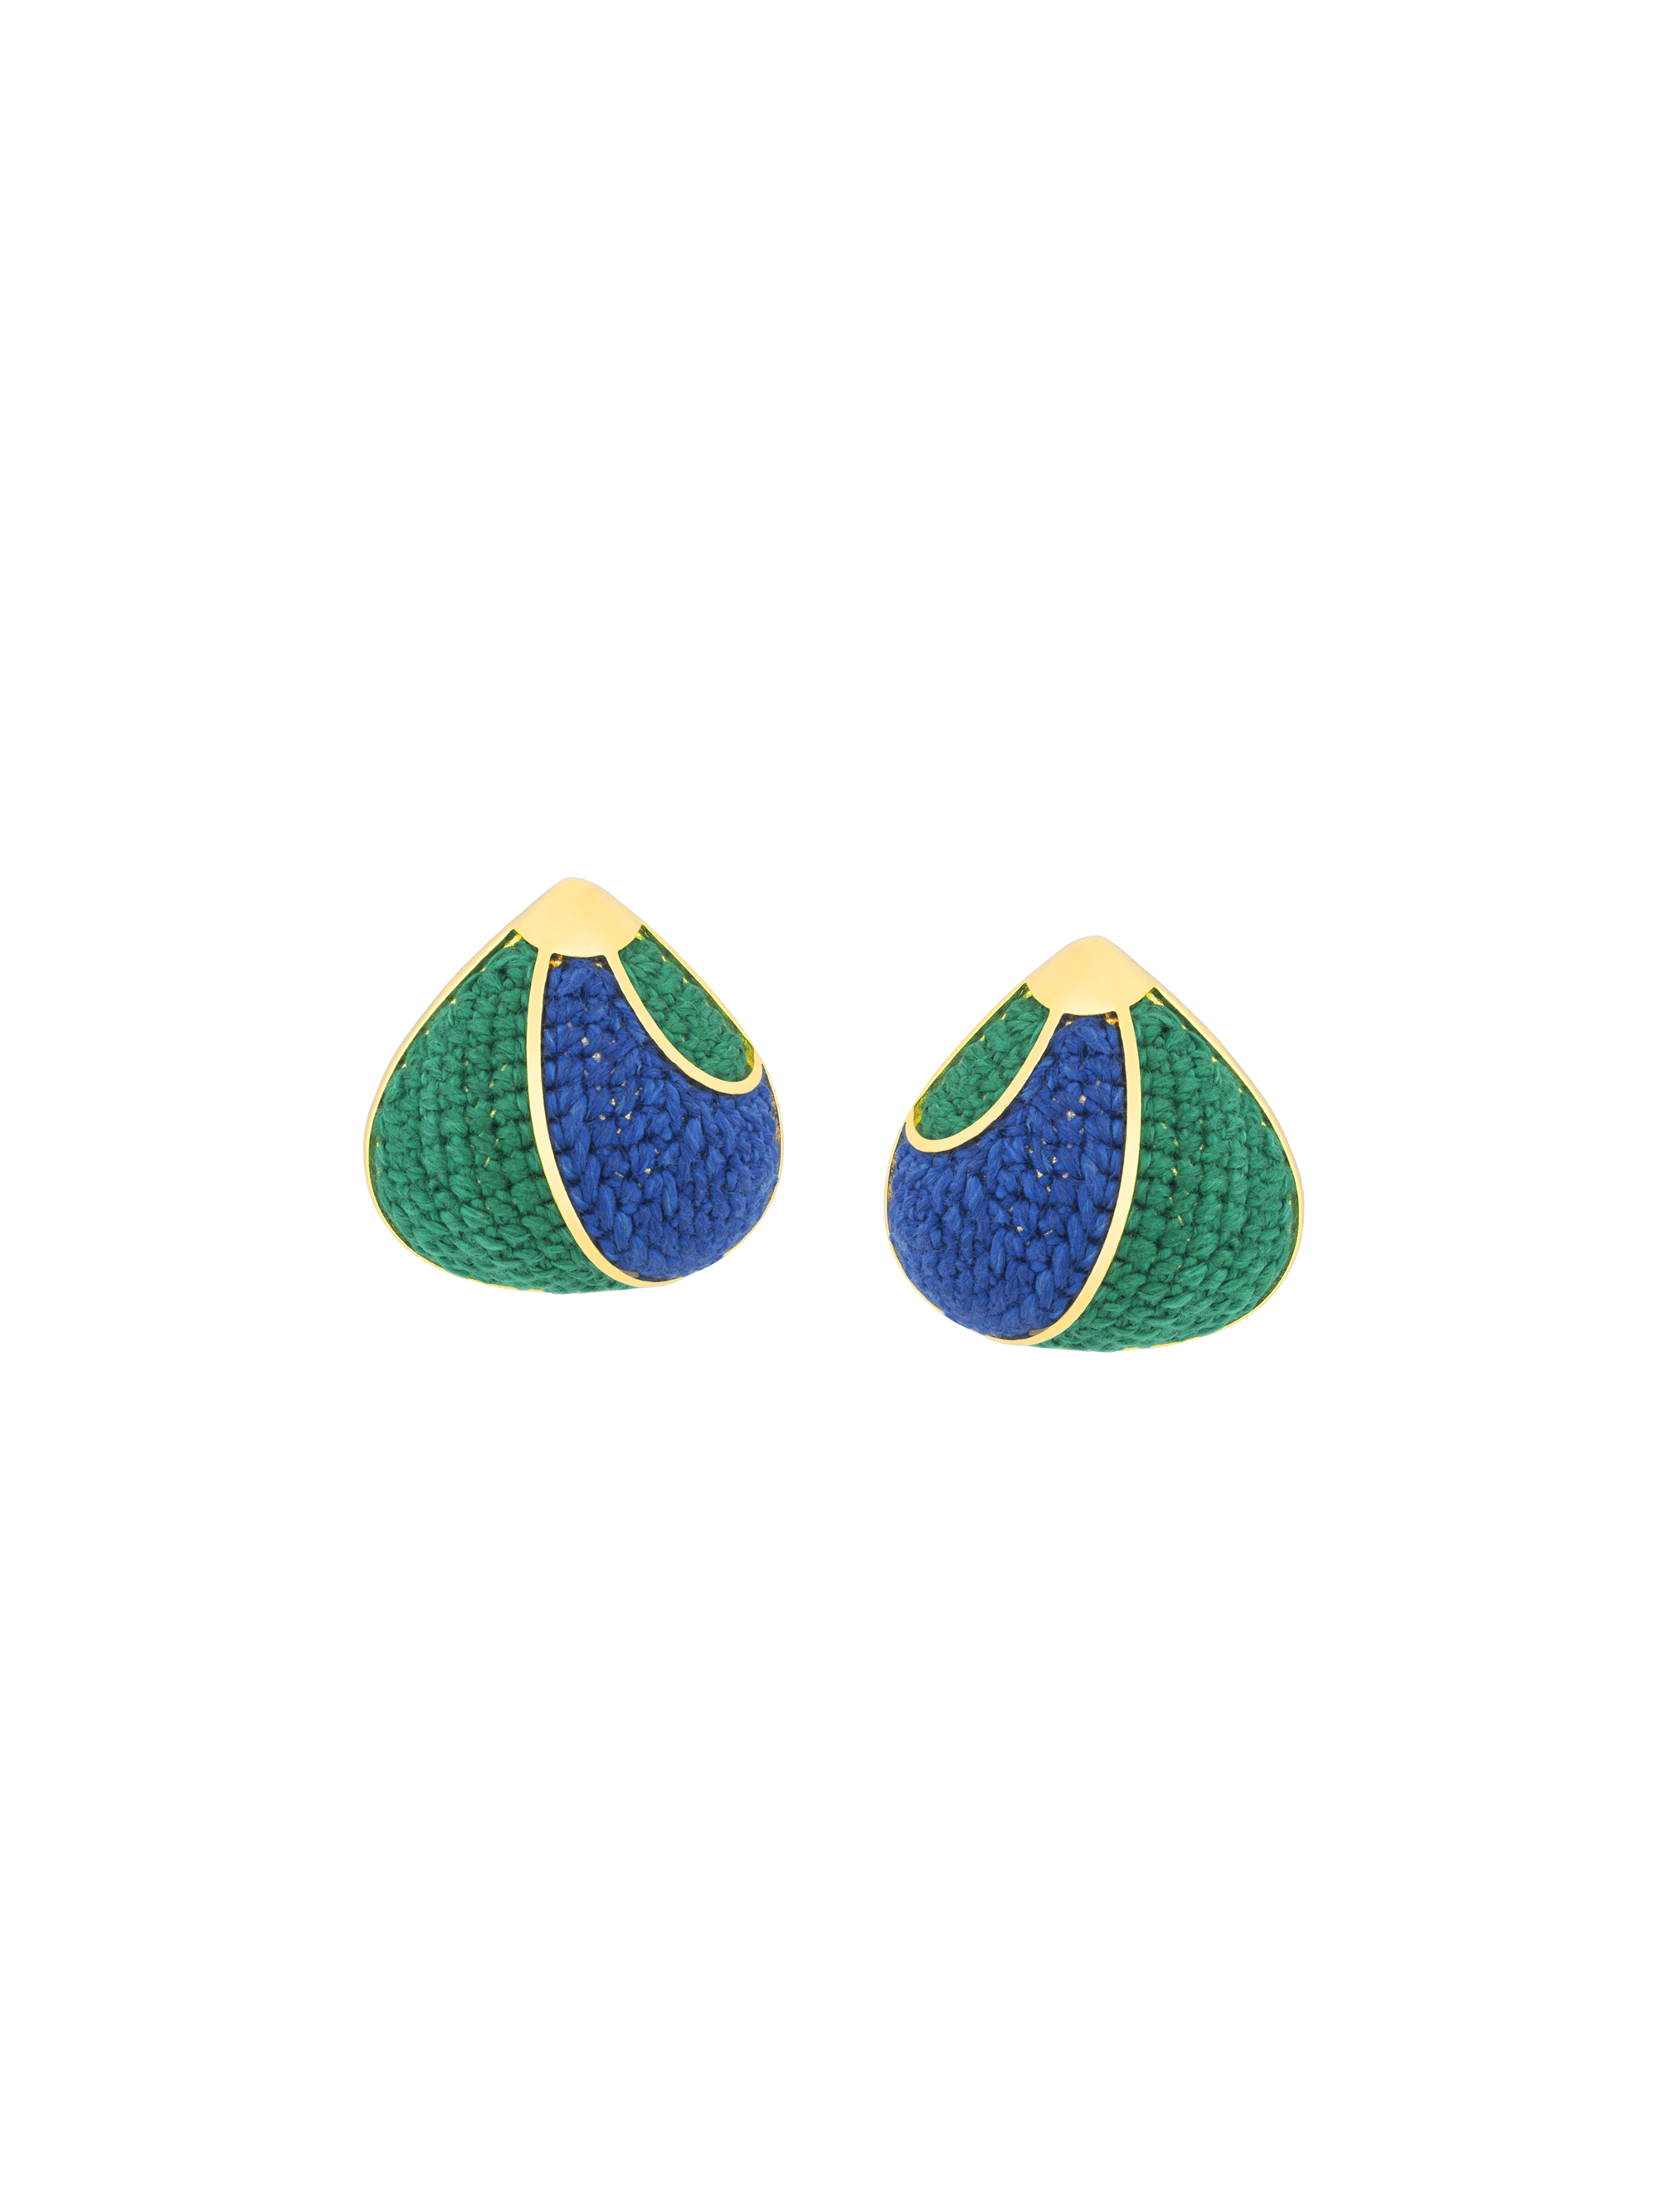 Suspiro Earrings - Blue and Green